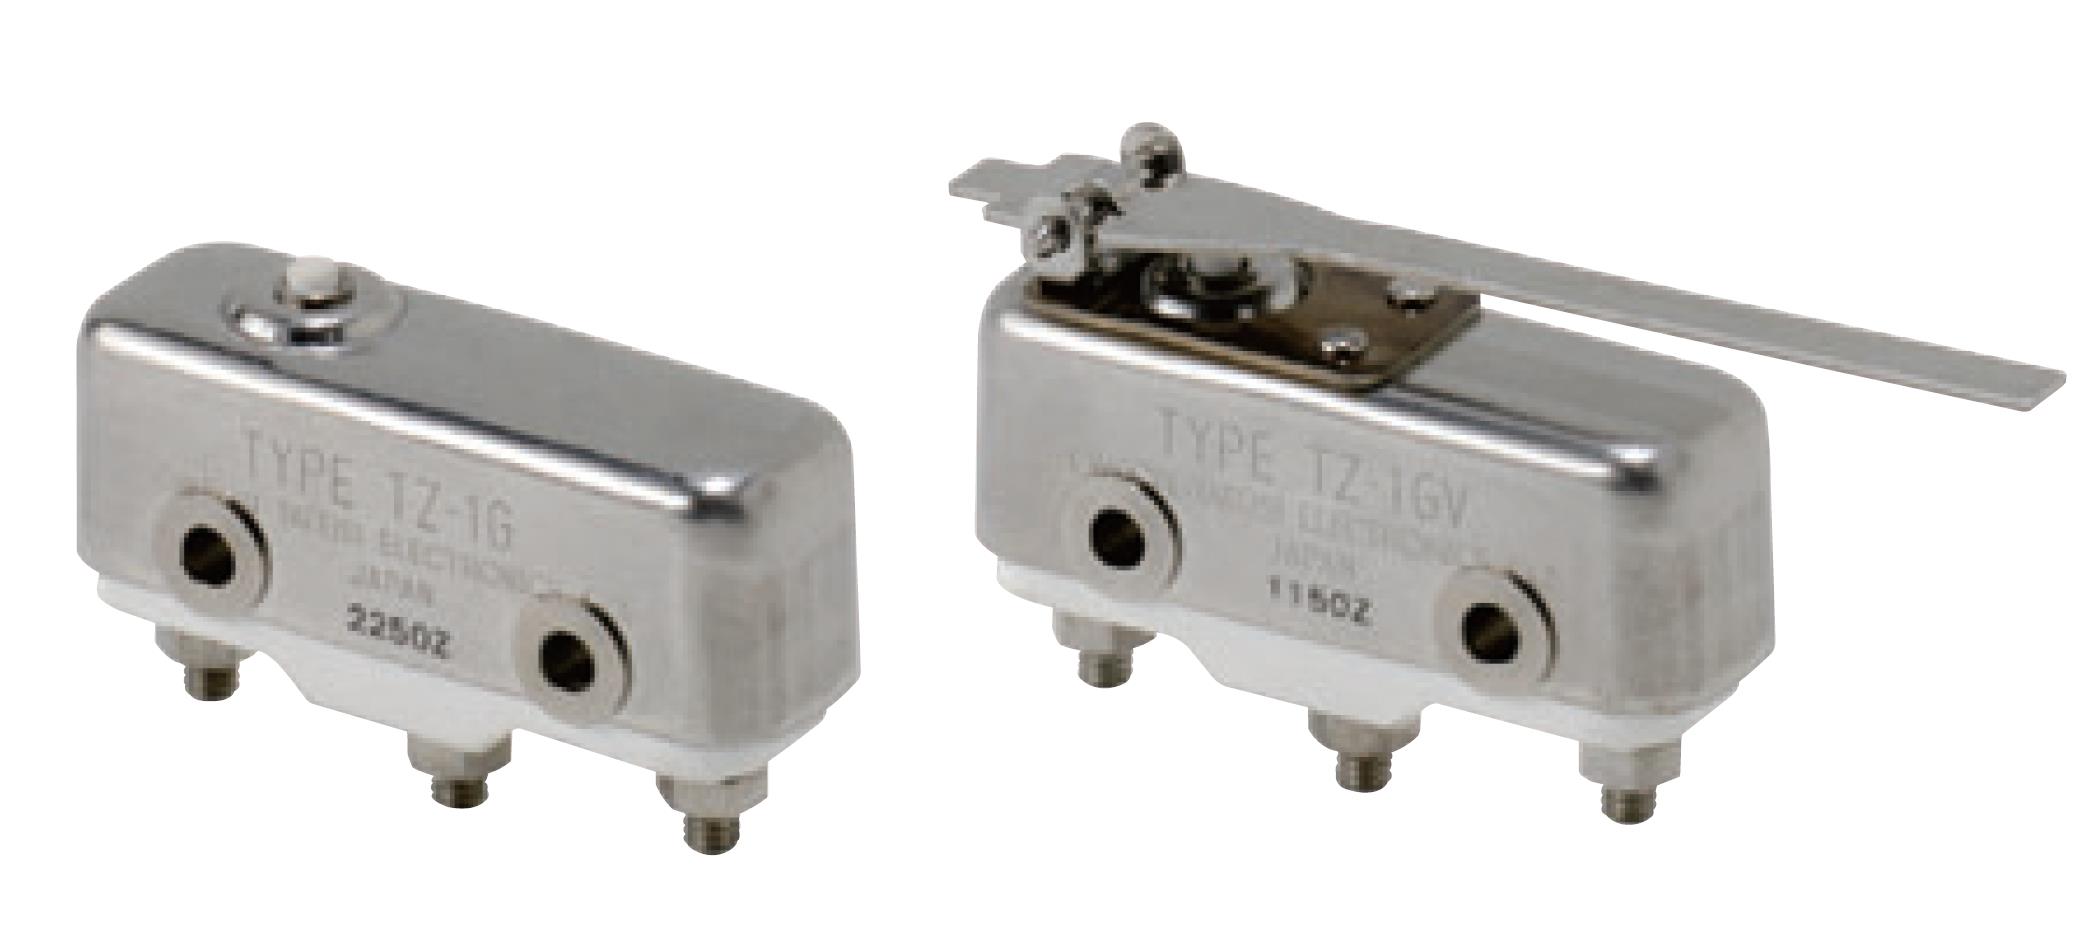 TZ-1G输出类型：继电器
欧姆龙高温标准型开关